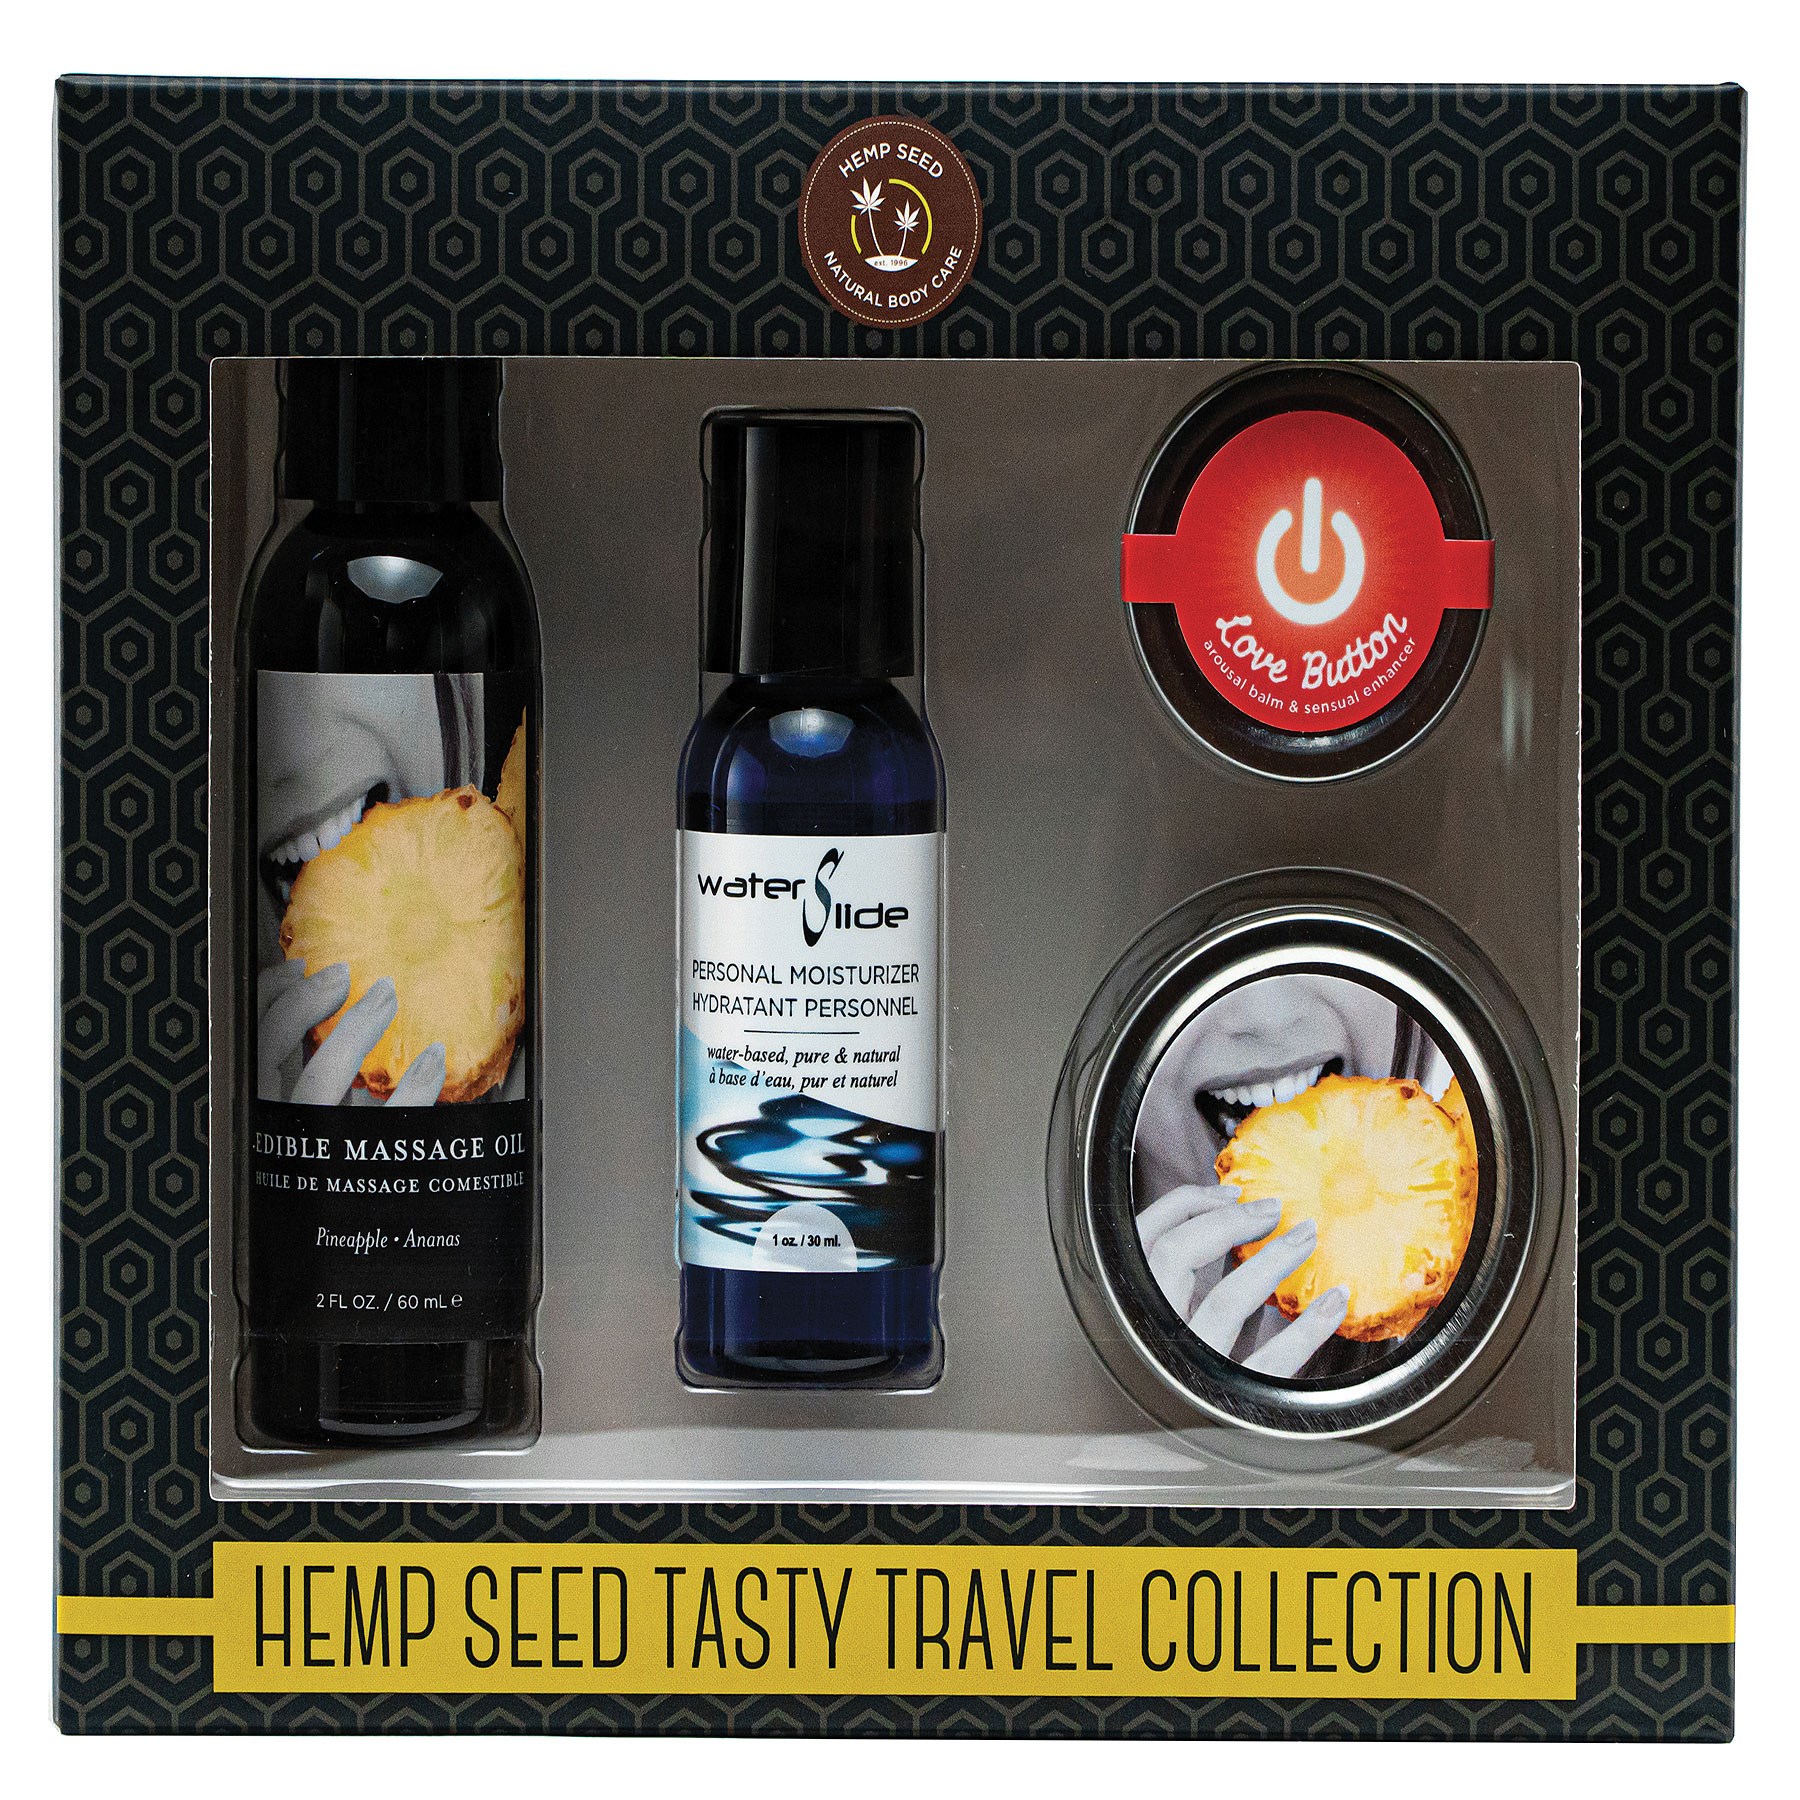 Hemp Seed Tasty Travel Collection